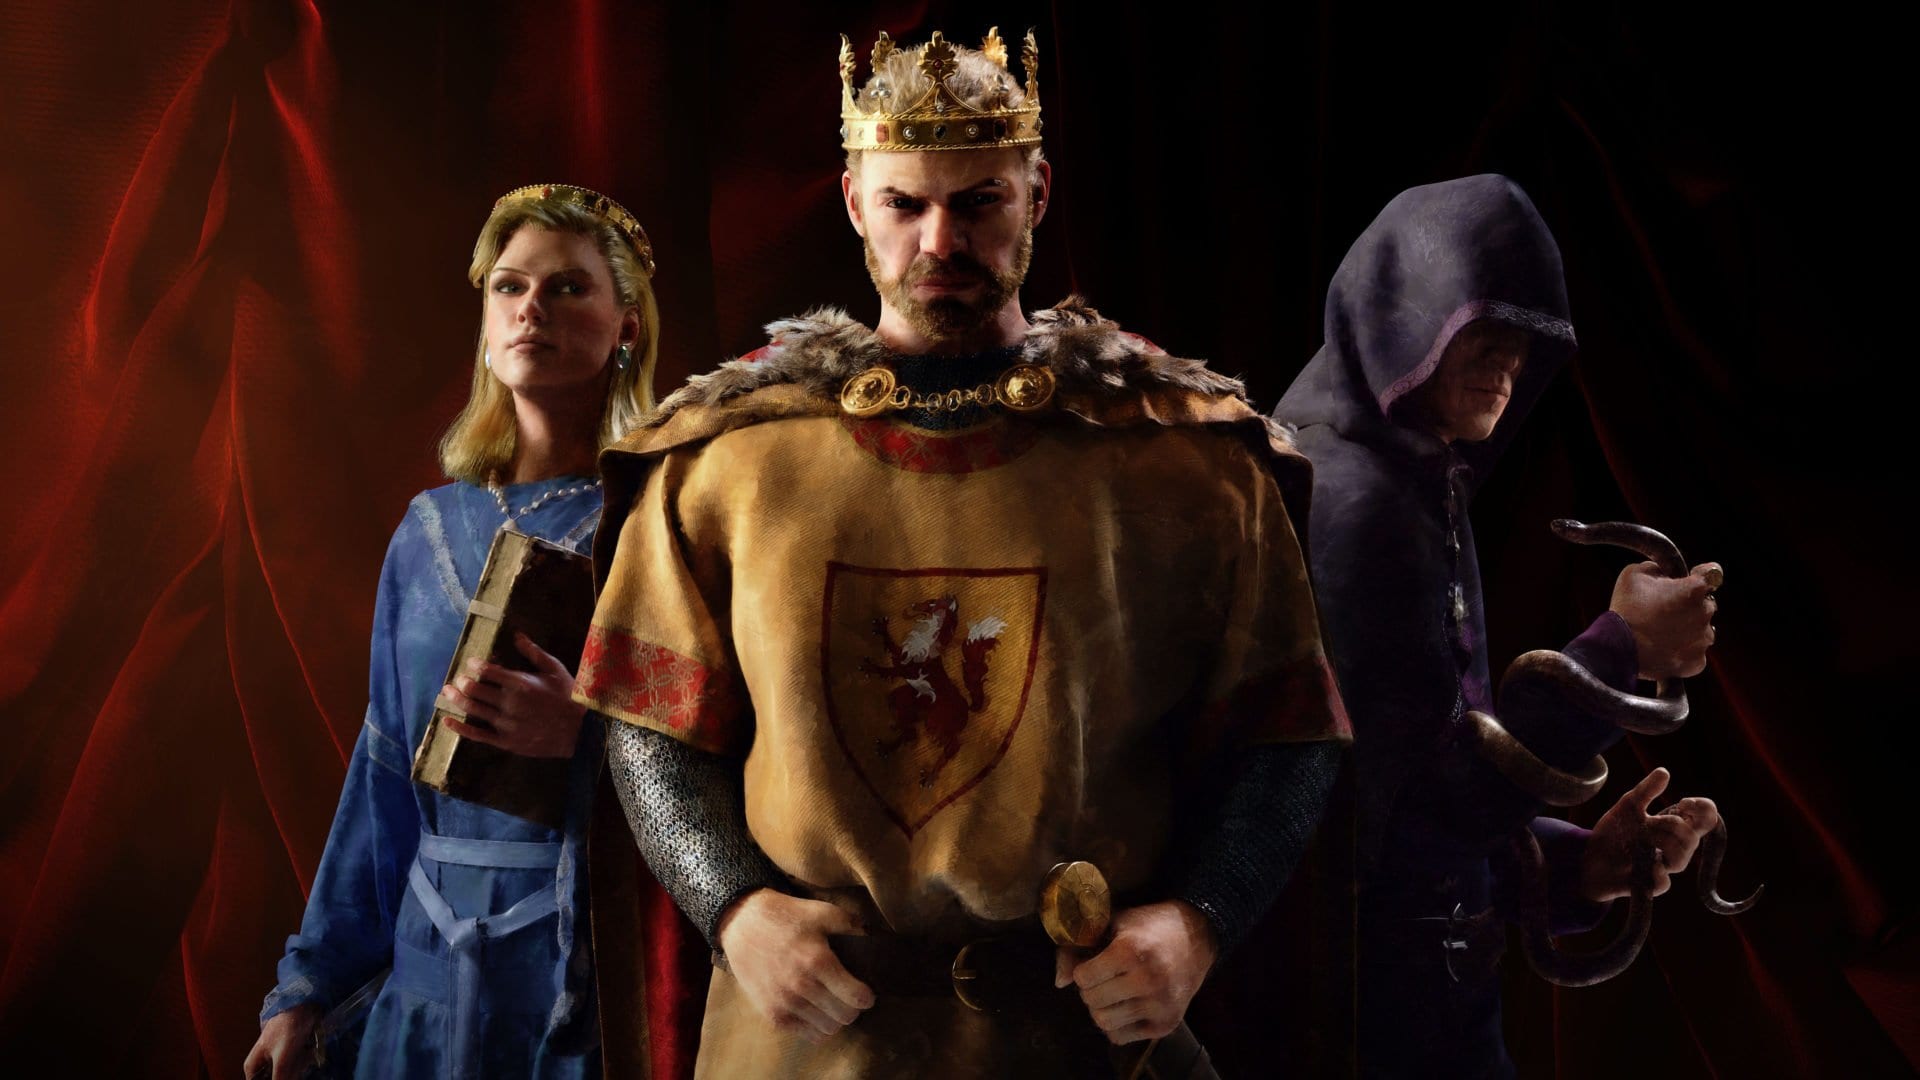 crusader kings 2 remove trait